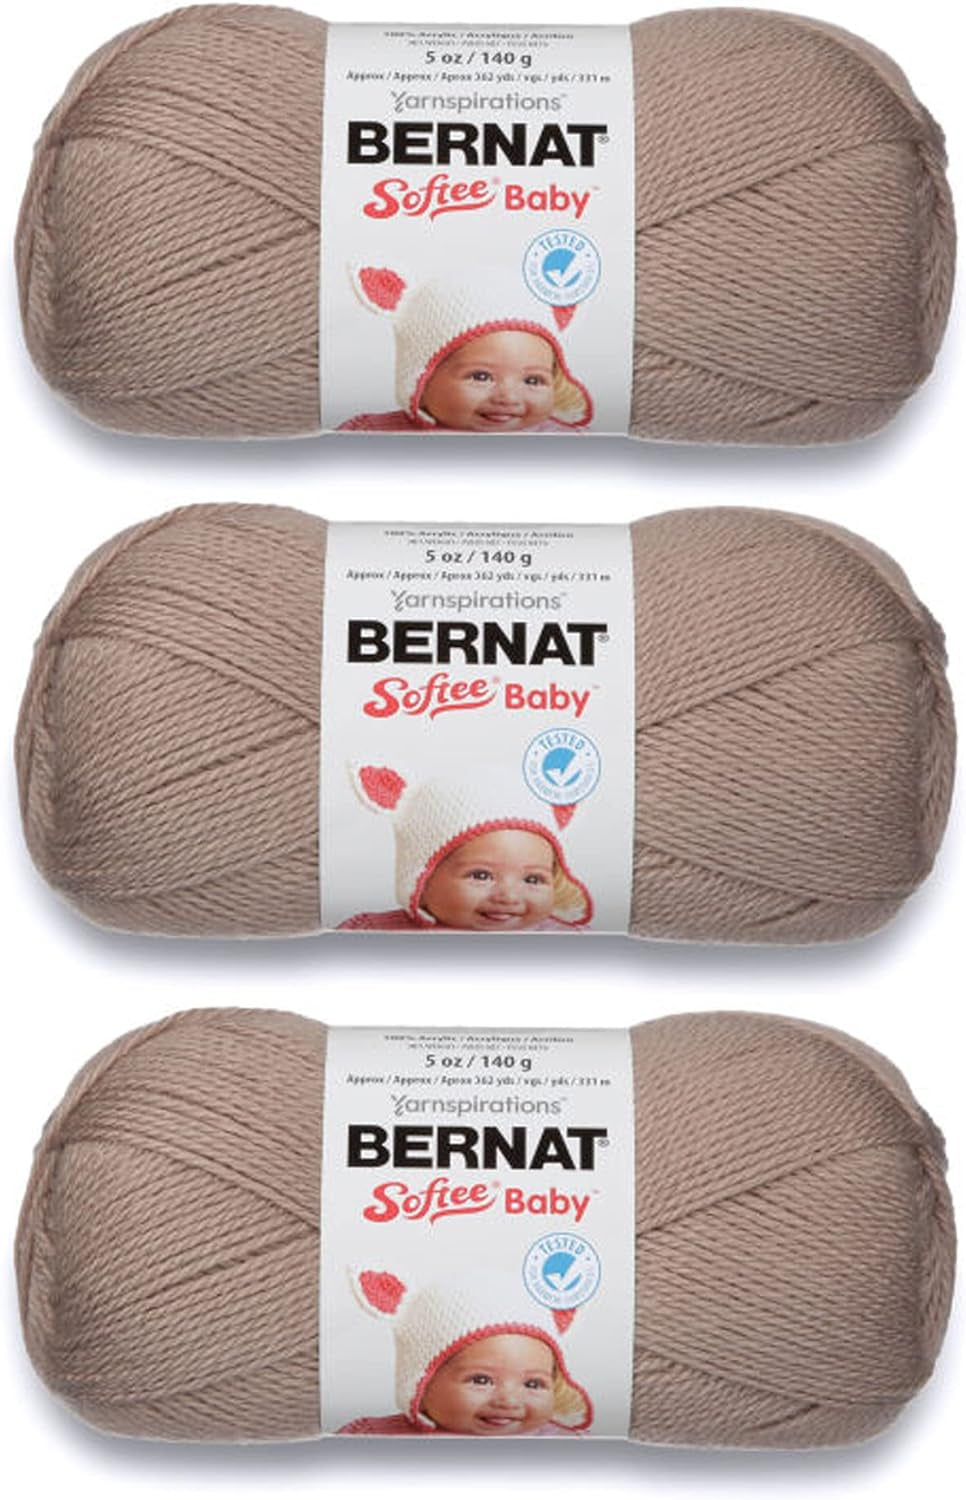 Softee Baby White Yarn - 3 Pack of 141G/5Oz - Acrylic - 3 DK (Light) - 362 Yards - Knitting/Crochet